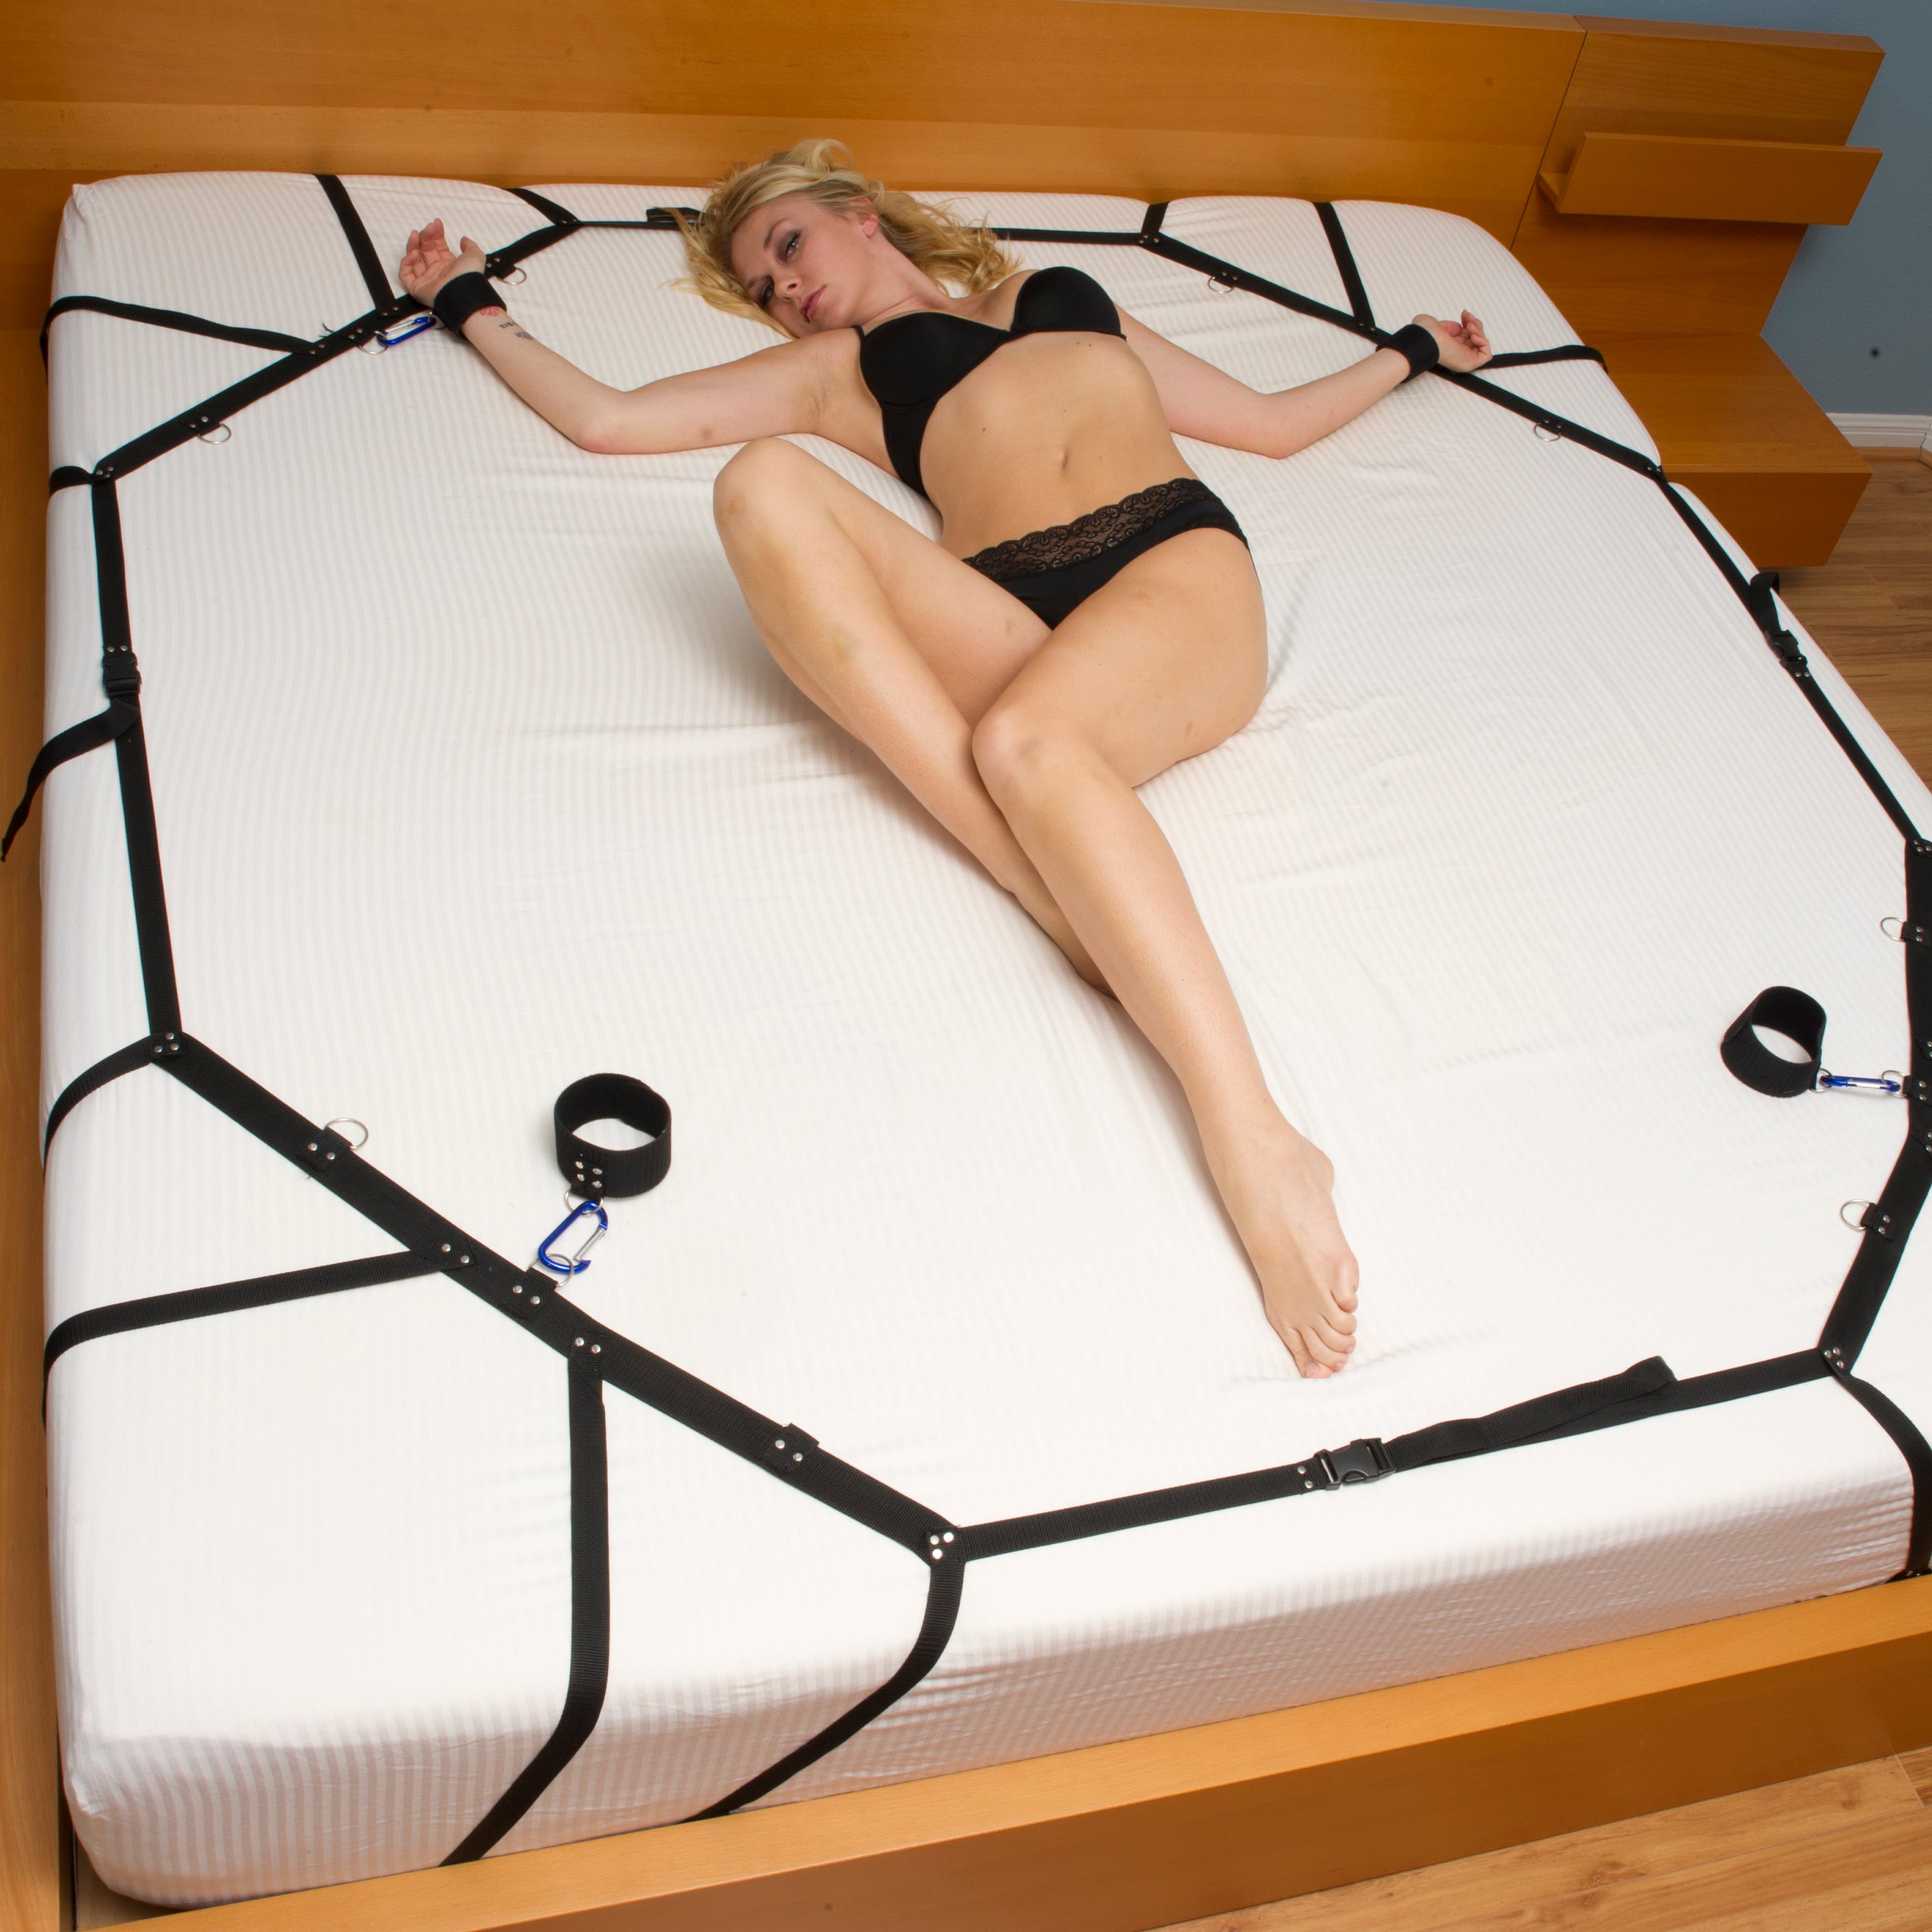 4 Corner Bed Restraint System for Bed Bondage BDSM Bed Restraint, BDSM Set,  King, Queen and Double Bed Restraint, Shibari 